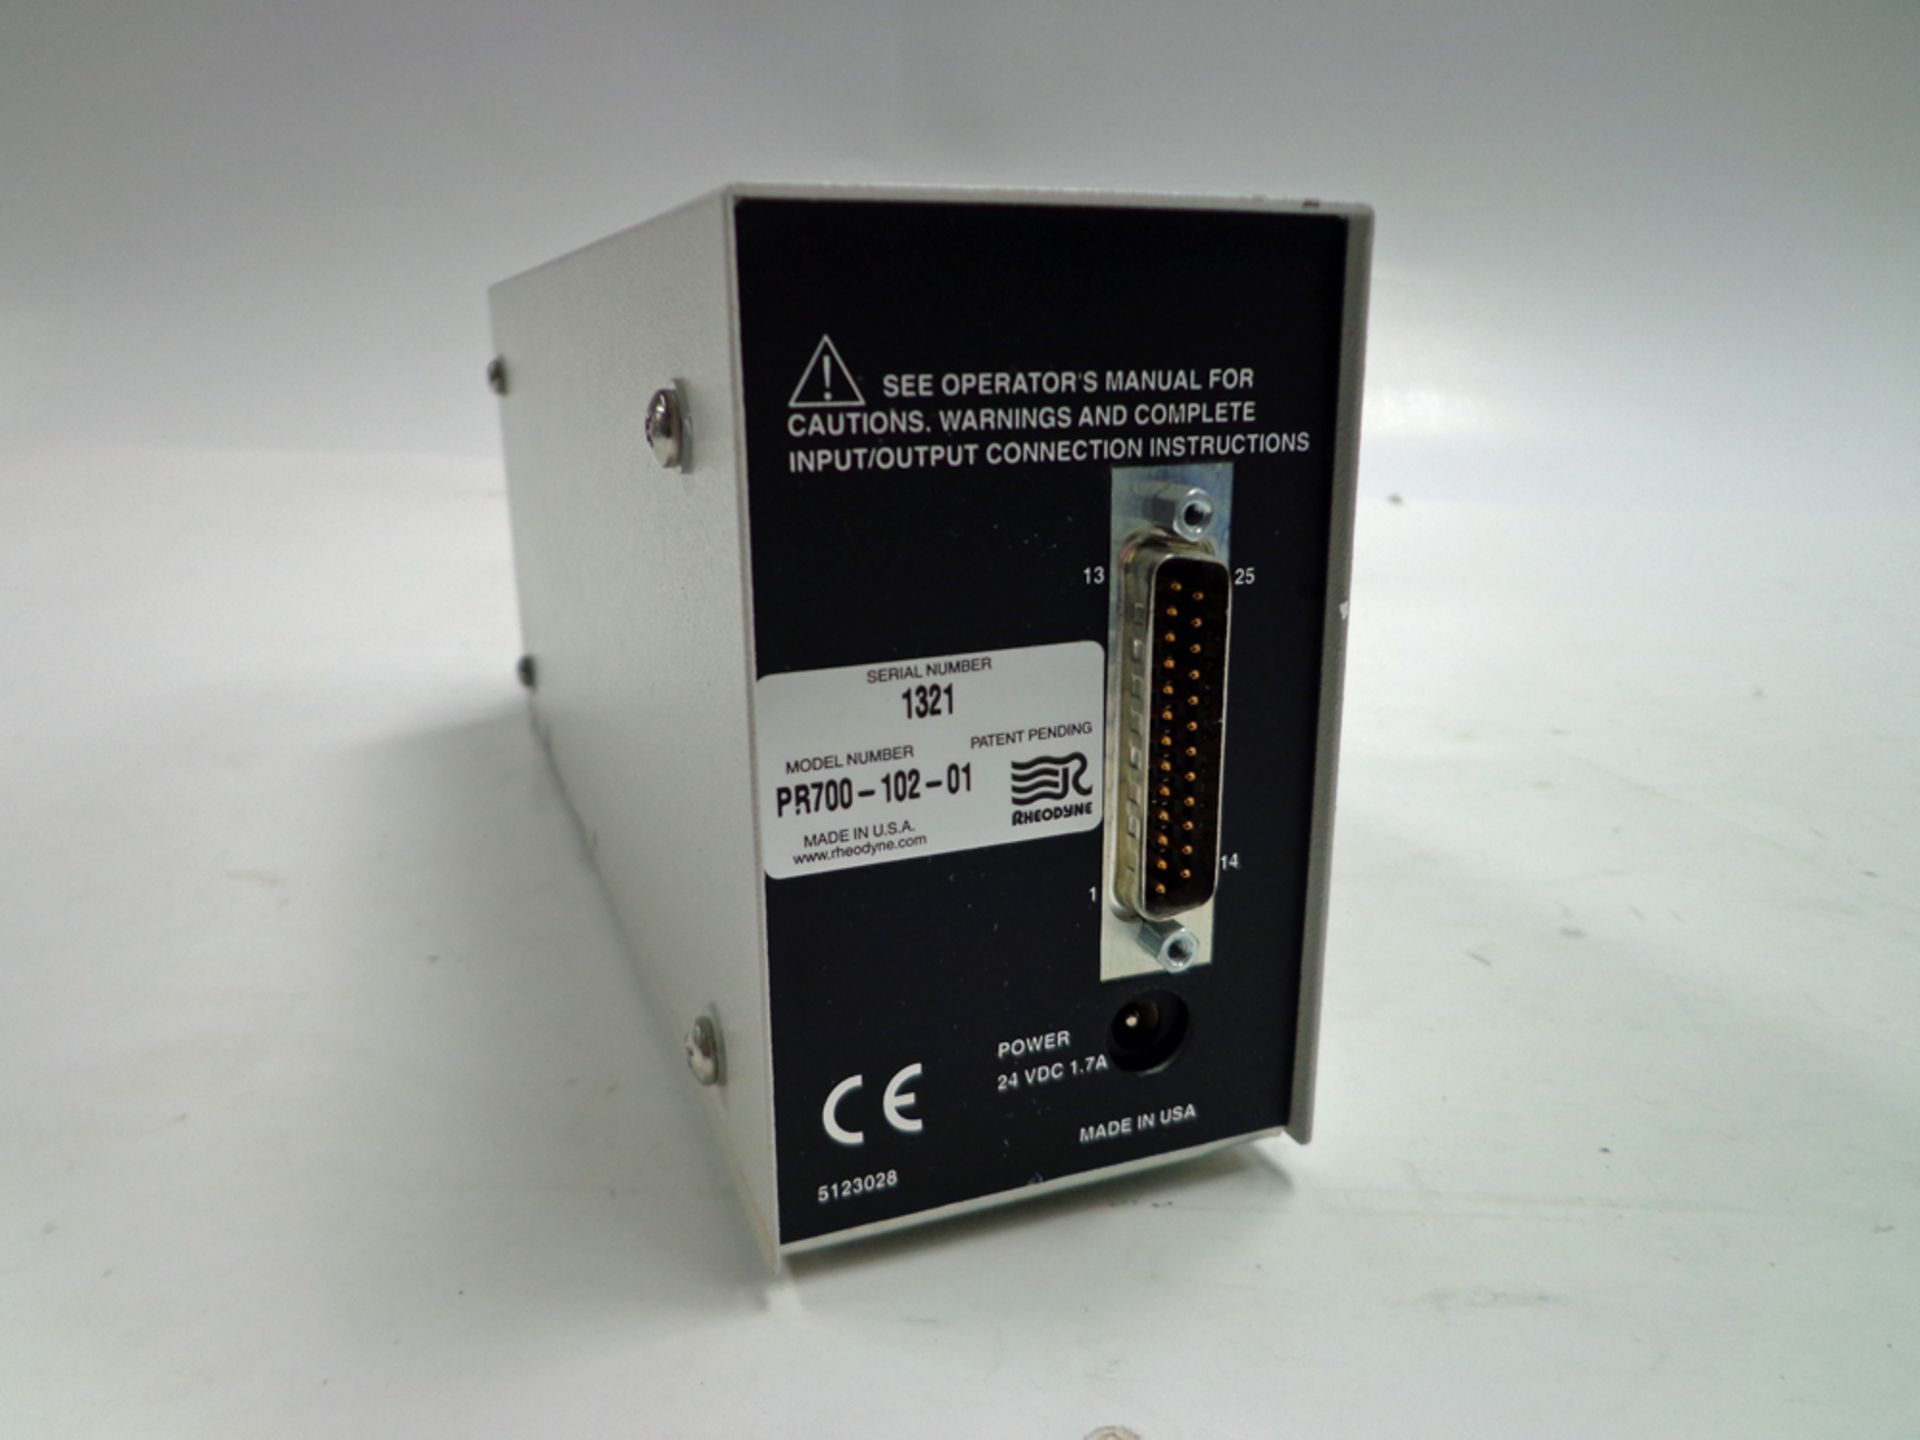 Rheodyne Labpro Valve Controller PR100-106-02, serial number 1321 (Ref: WA11001) - Image 6 of 6